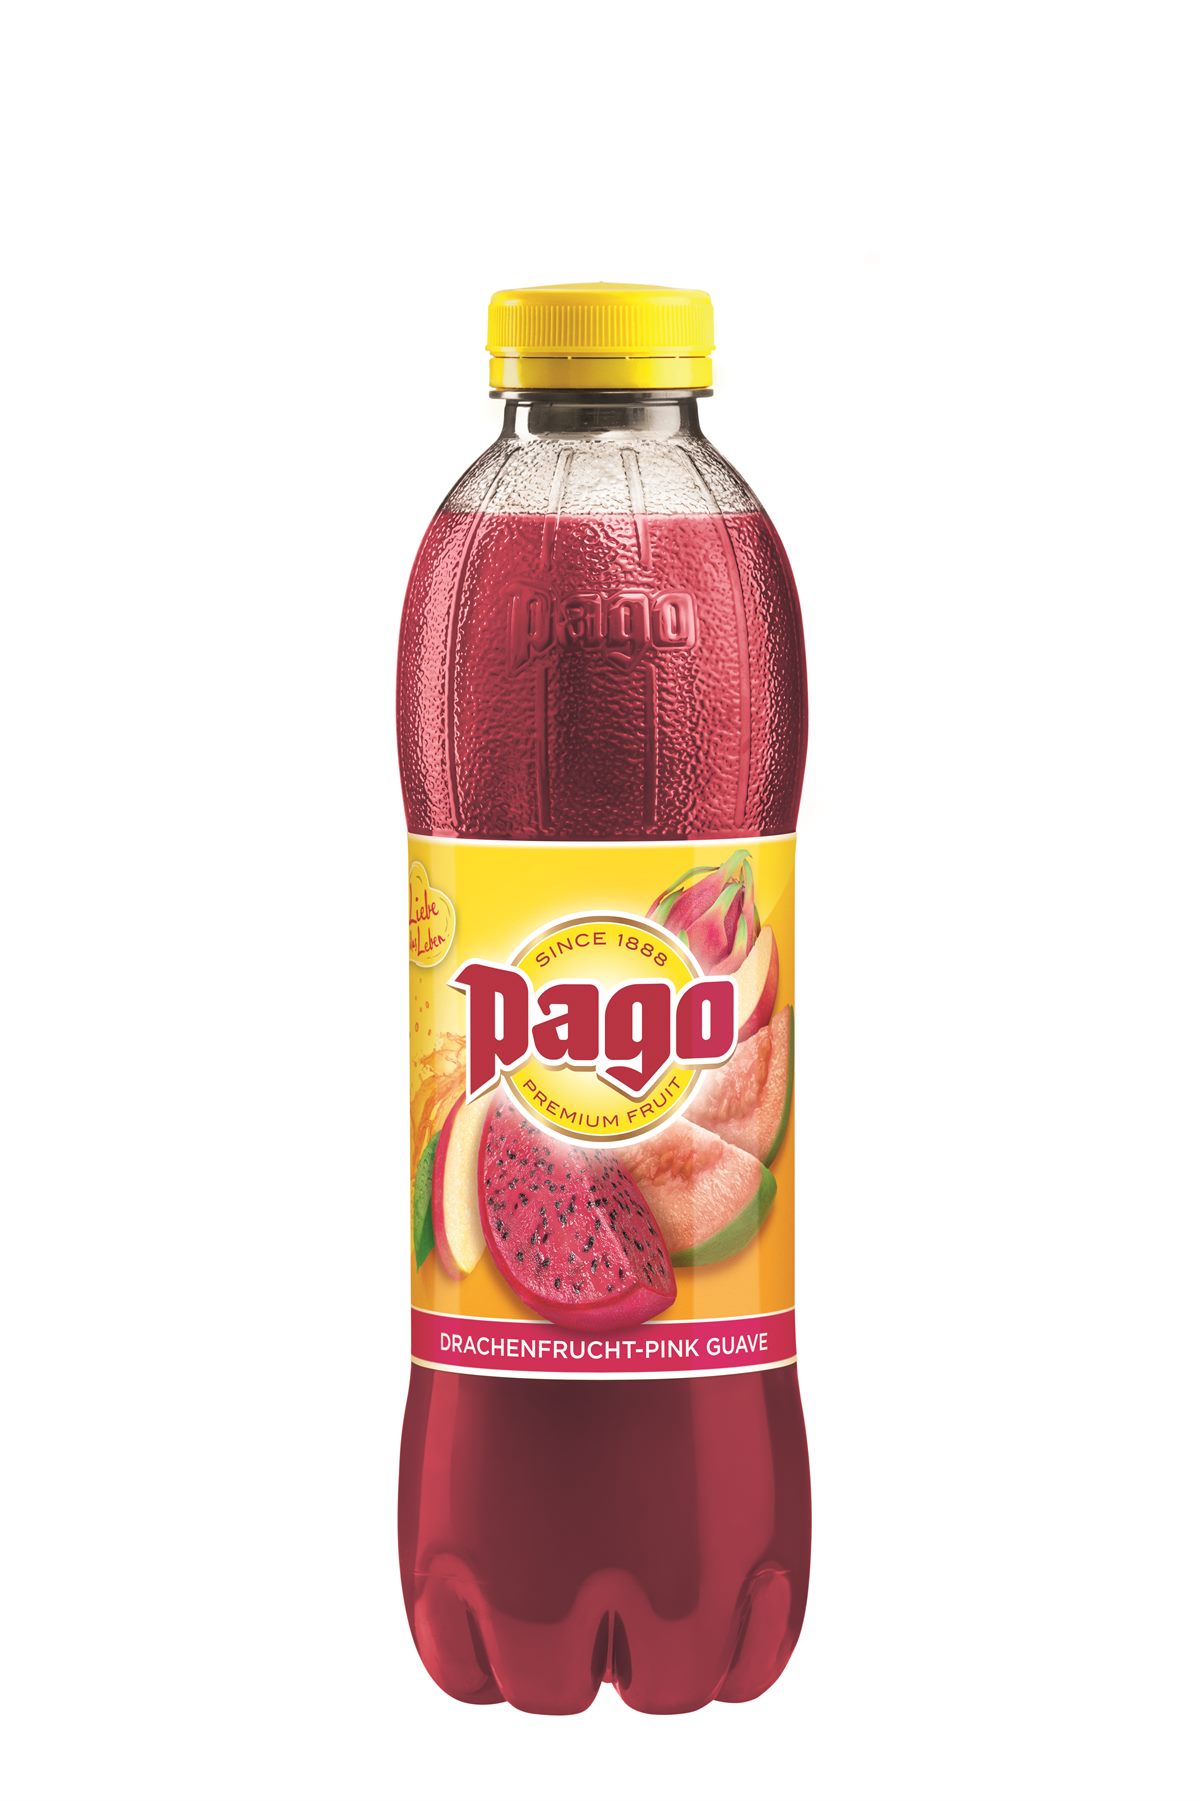 Pago Drachenfrucht-Pink Guave 750ml